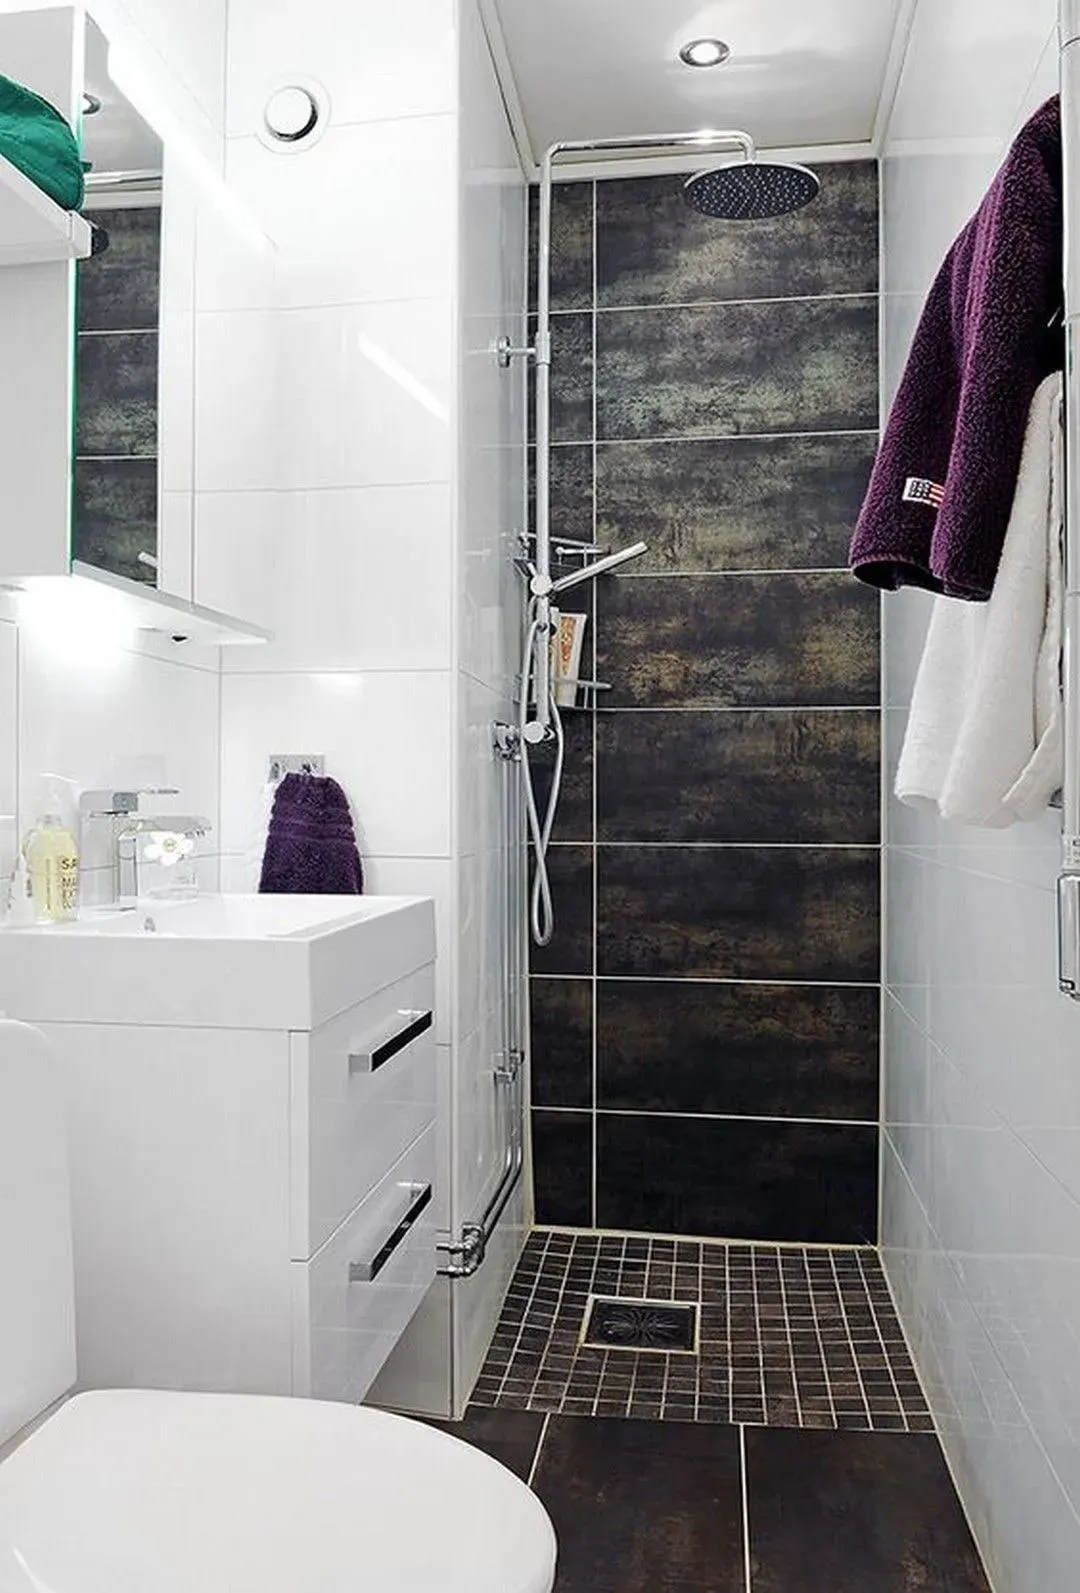 Дизайн ванной комнаты вытянутой формы